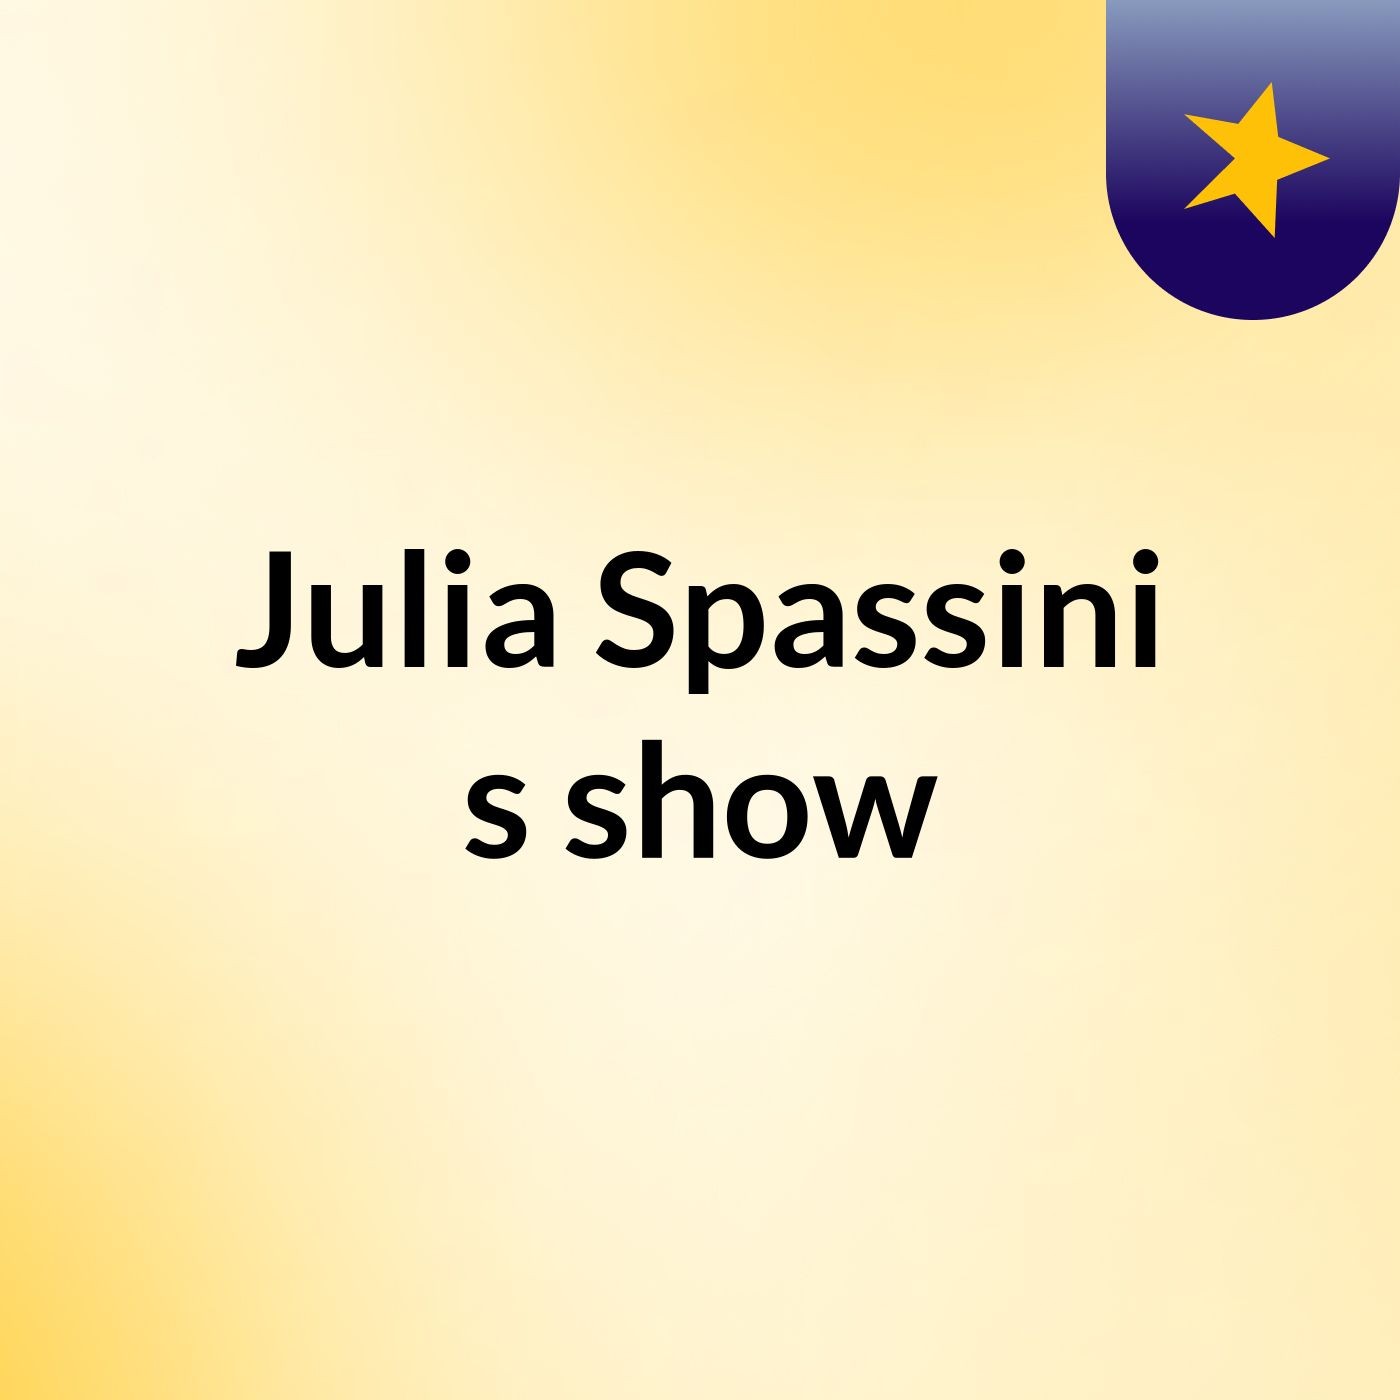 Julia Spassini's show